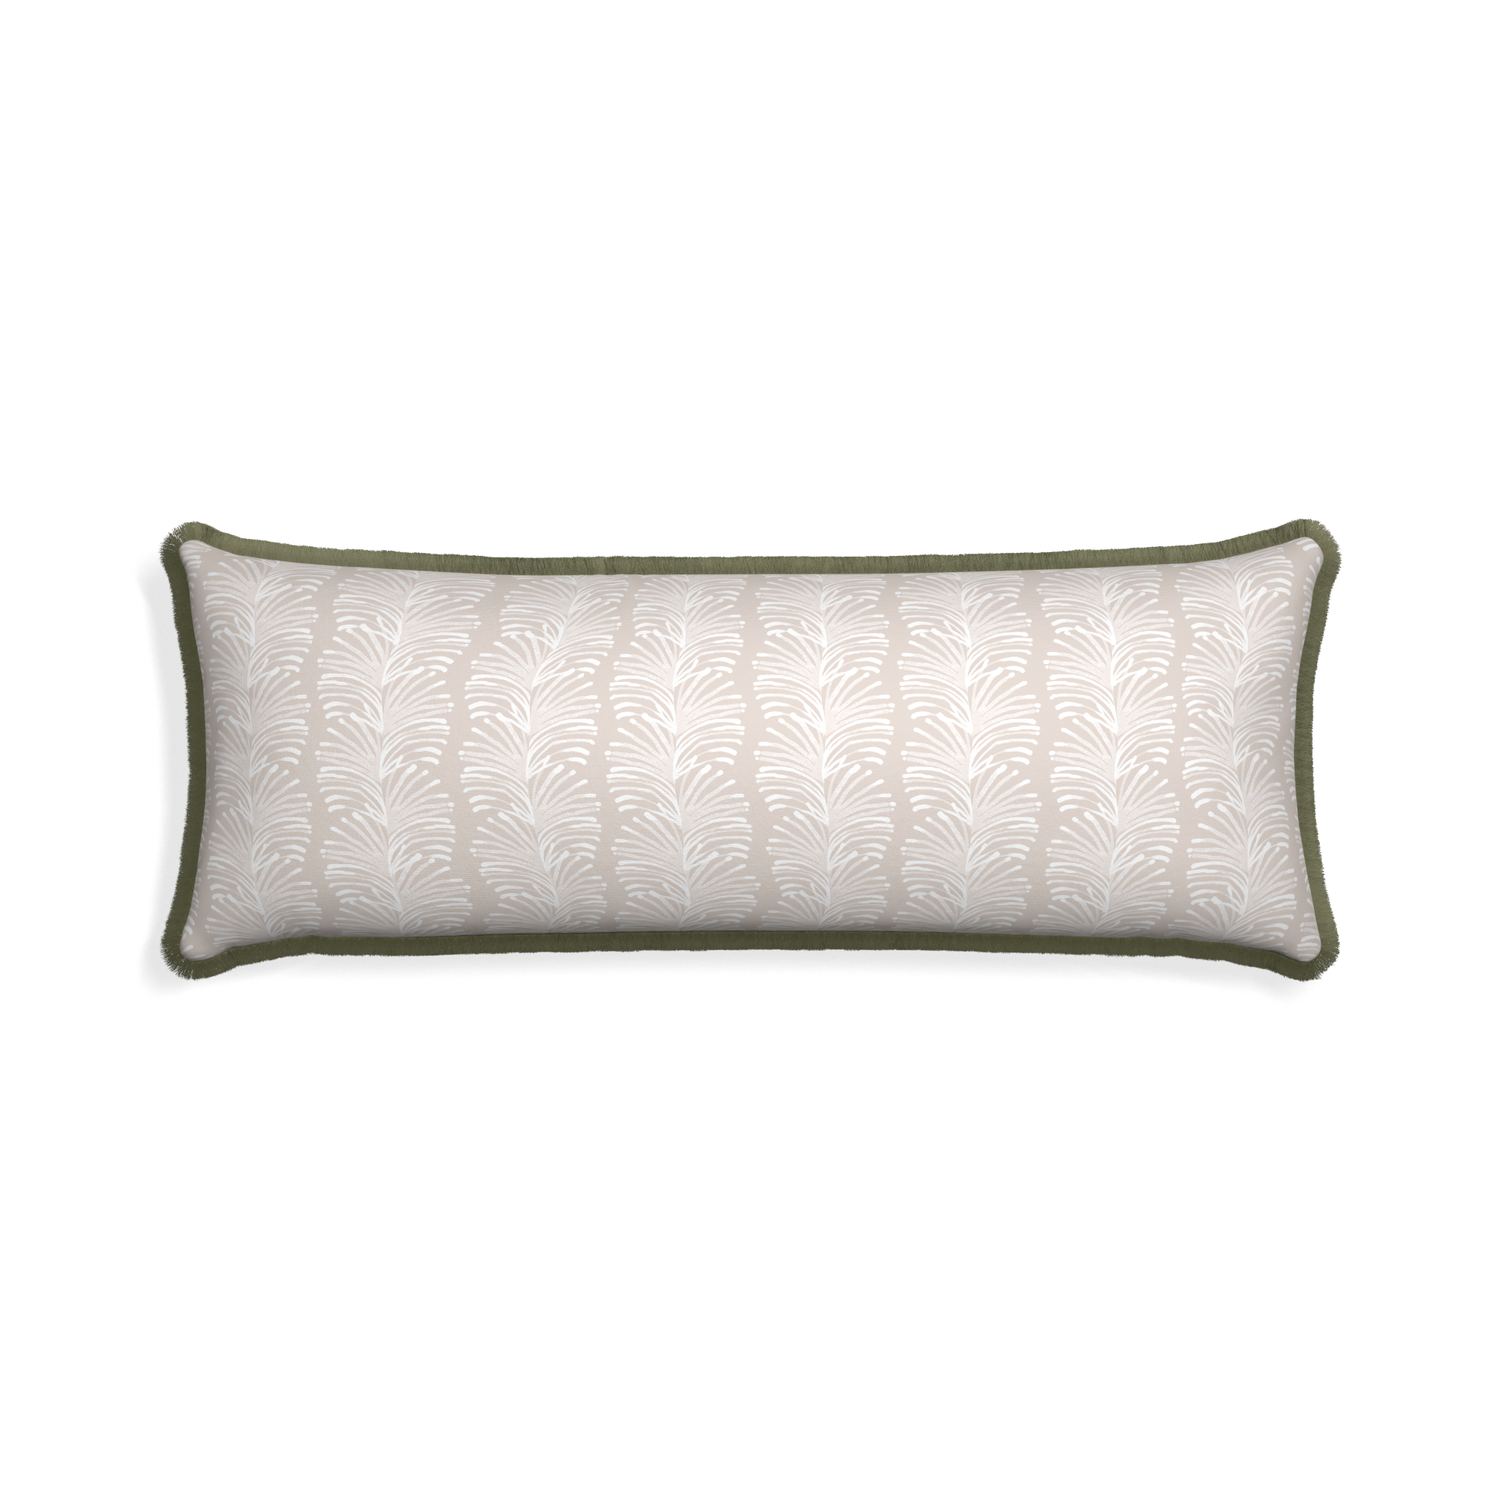 Xl-lumbar emma sand custom pillow with sage fringe on white background